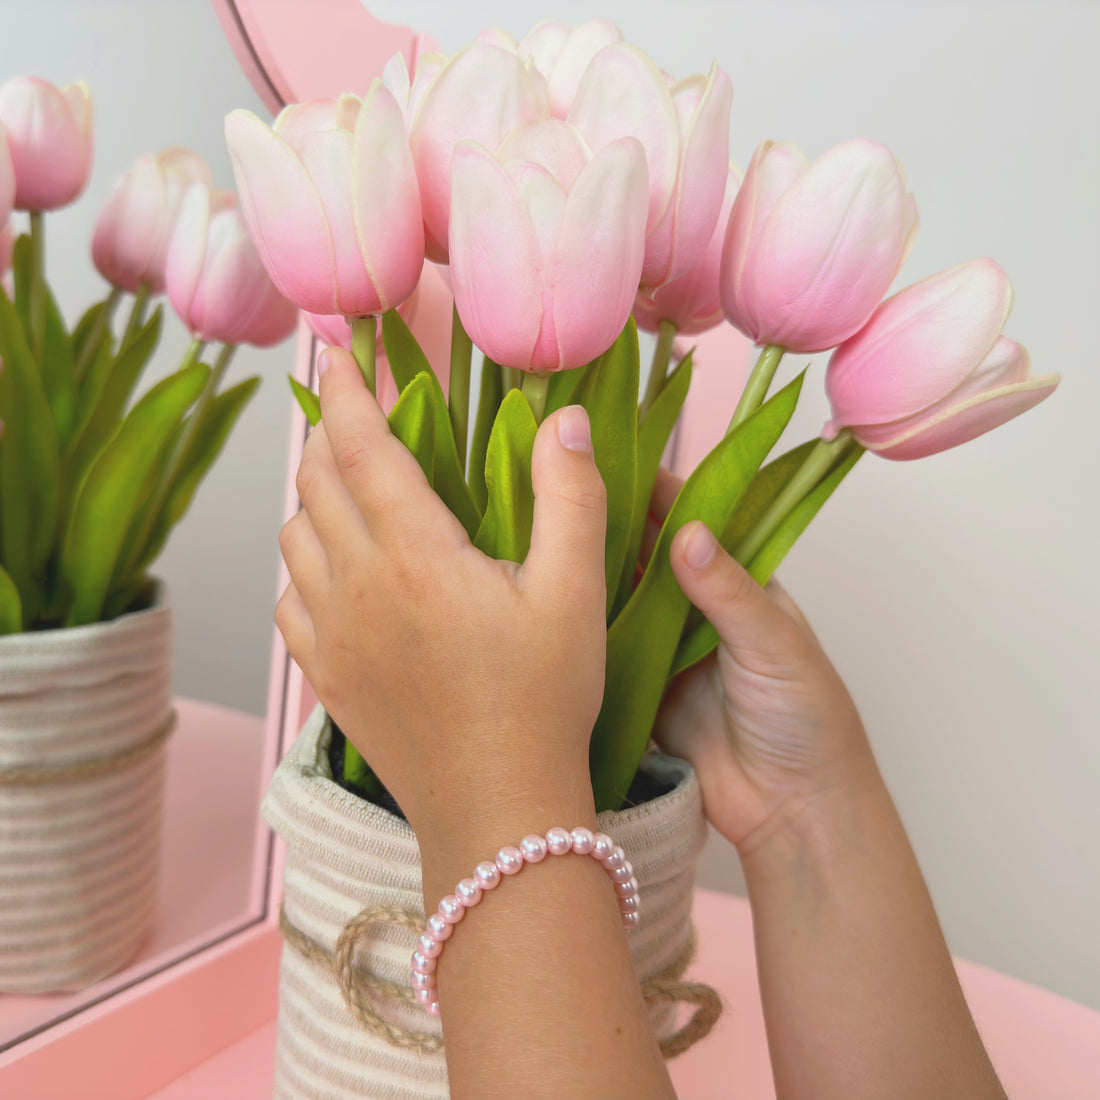 Infant Baby Girl Elegant Bracelet with Pink Pearls